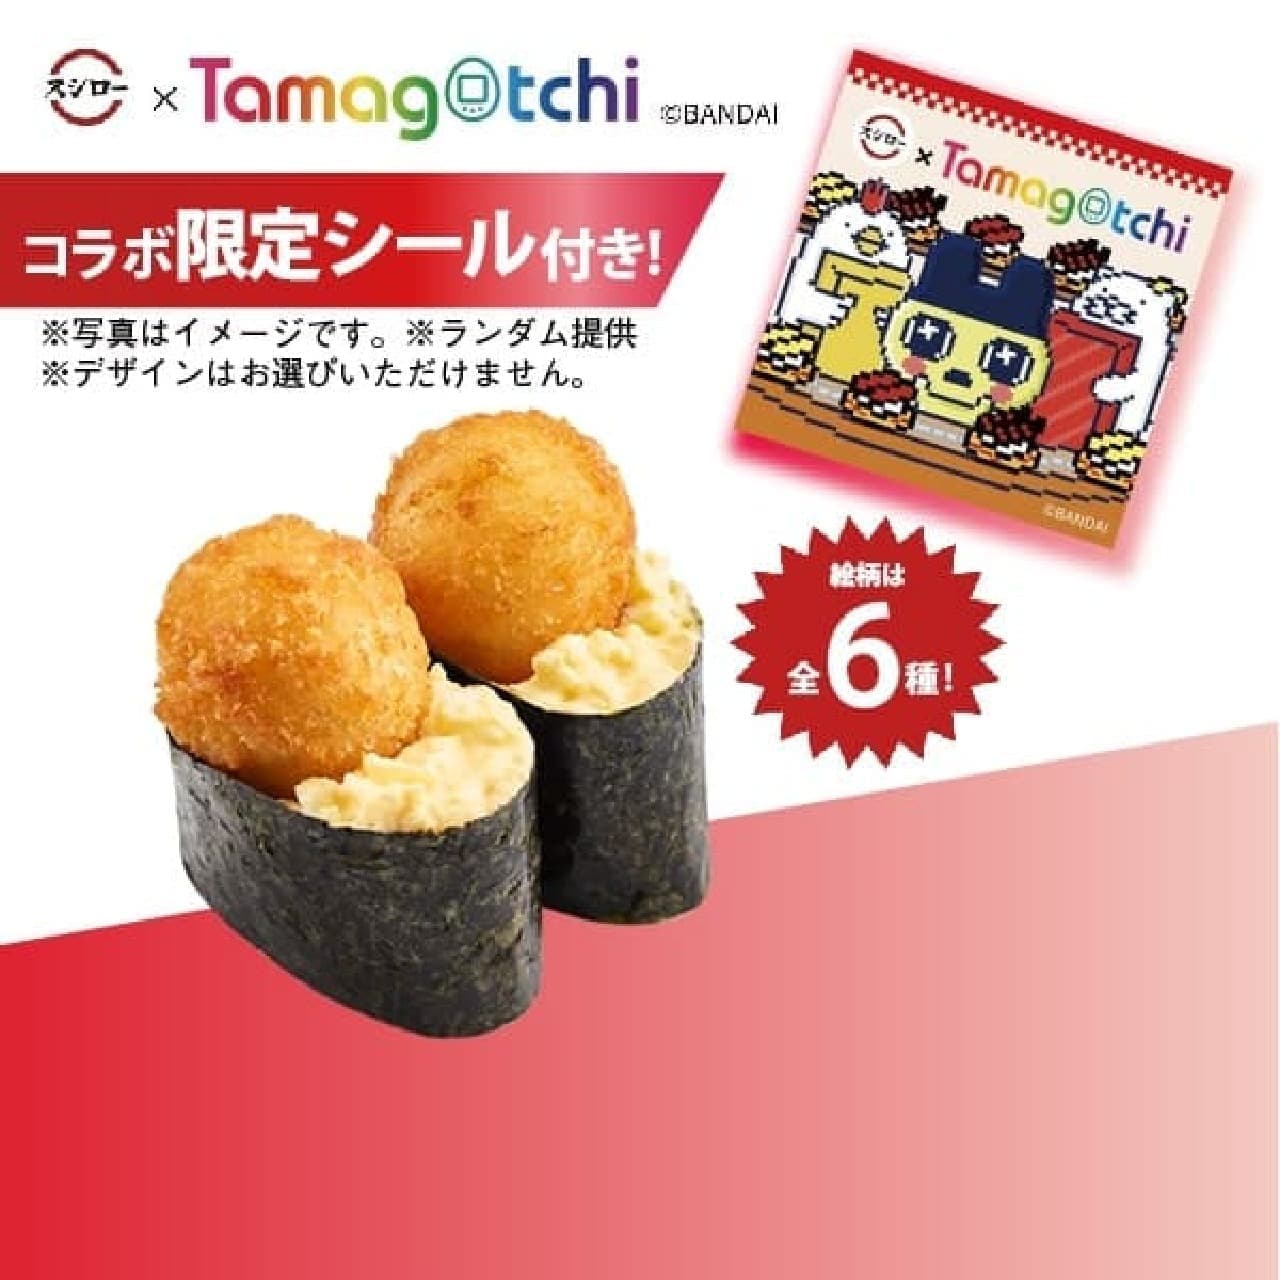 Sushiro "Tamagotchi Quail Fried Gunkan